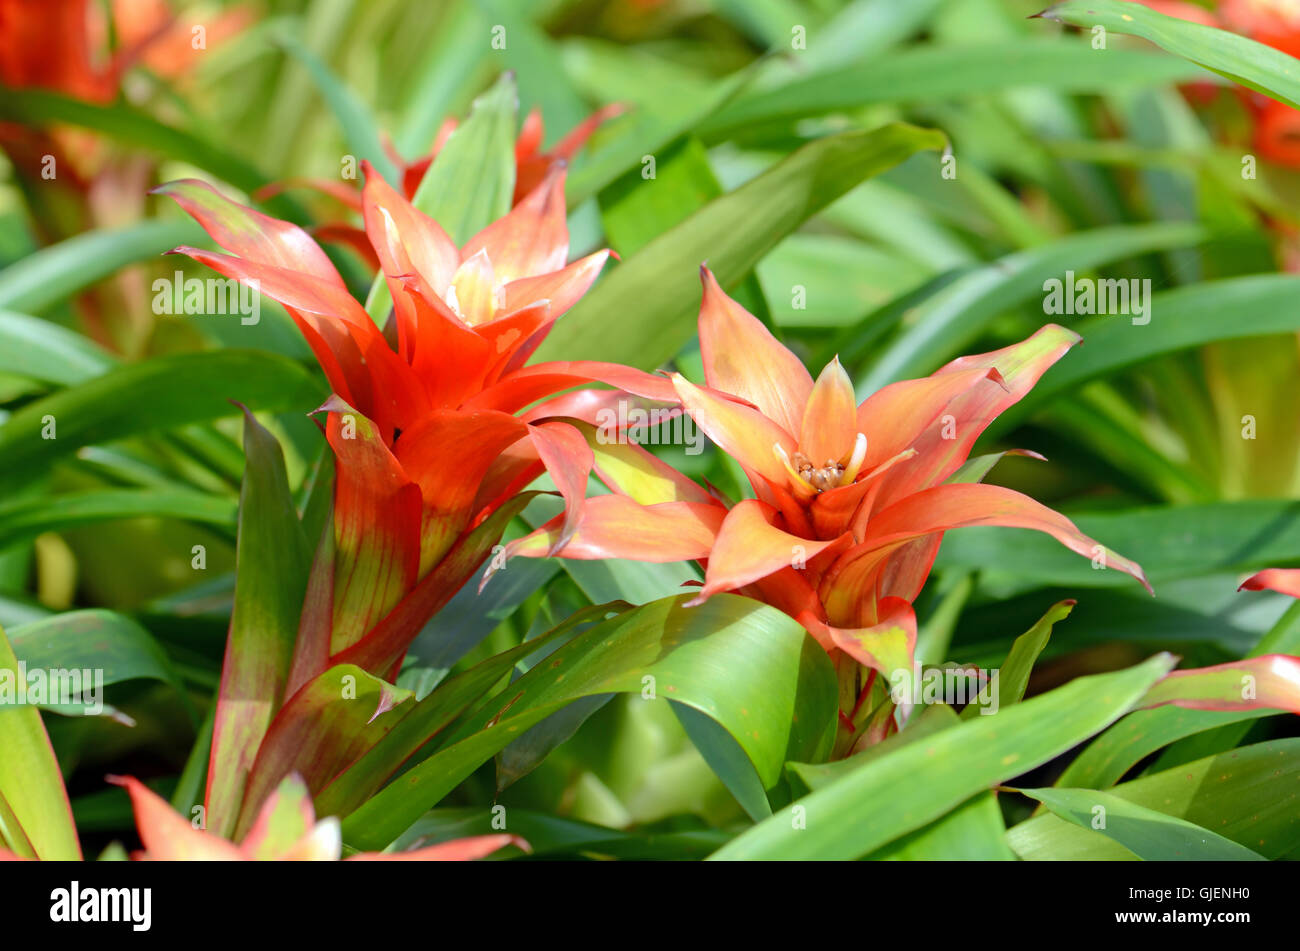 Bromeliad or Urn Plant (Aechmea fasciata) kind of local Brazil Plants. Stock Photo